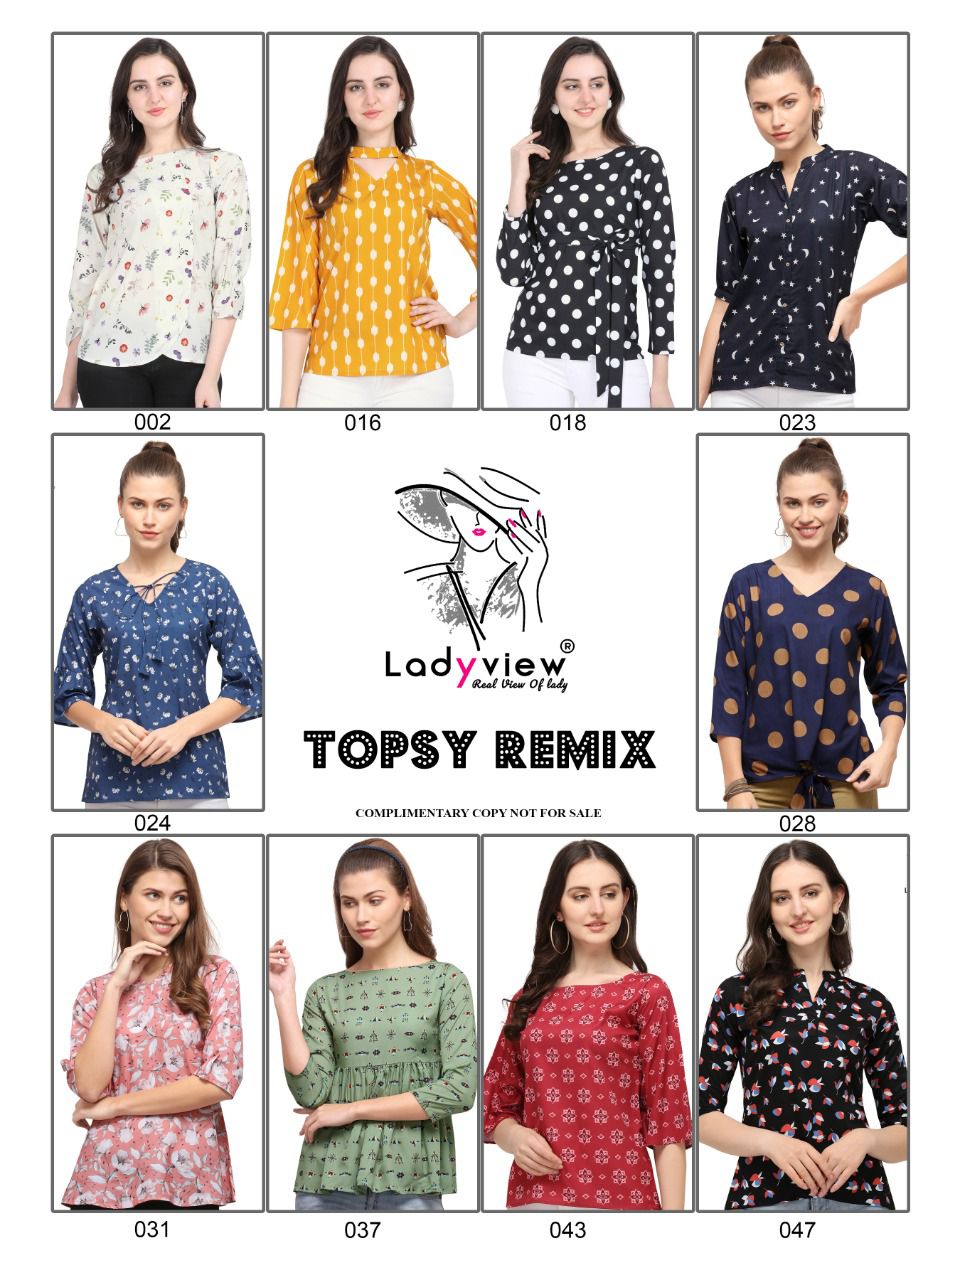 ladyview topsy remix crape decent look top catalog